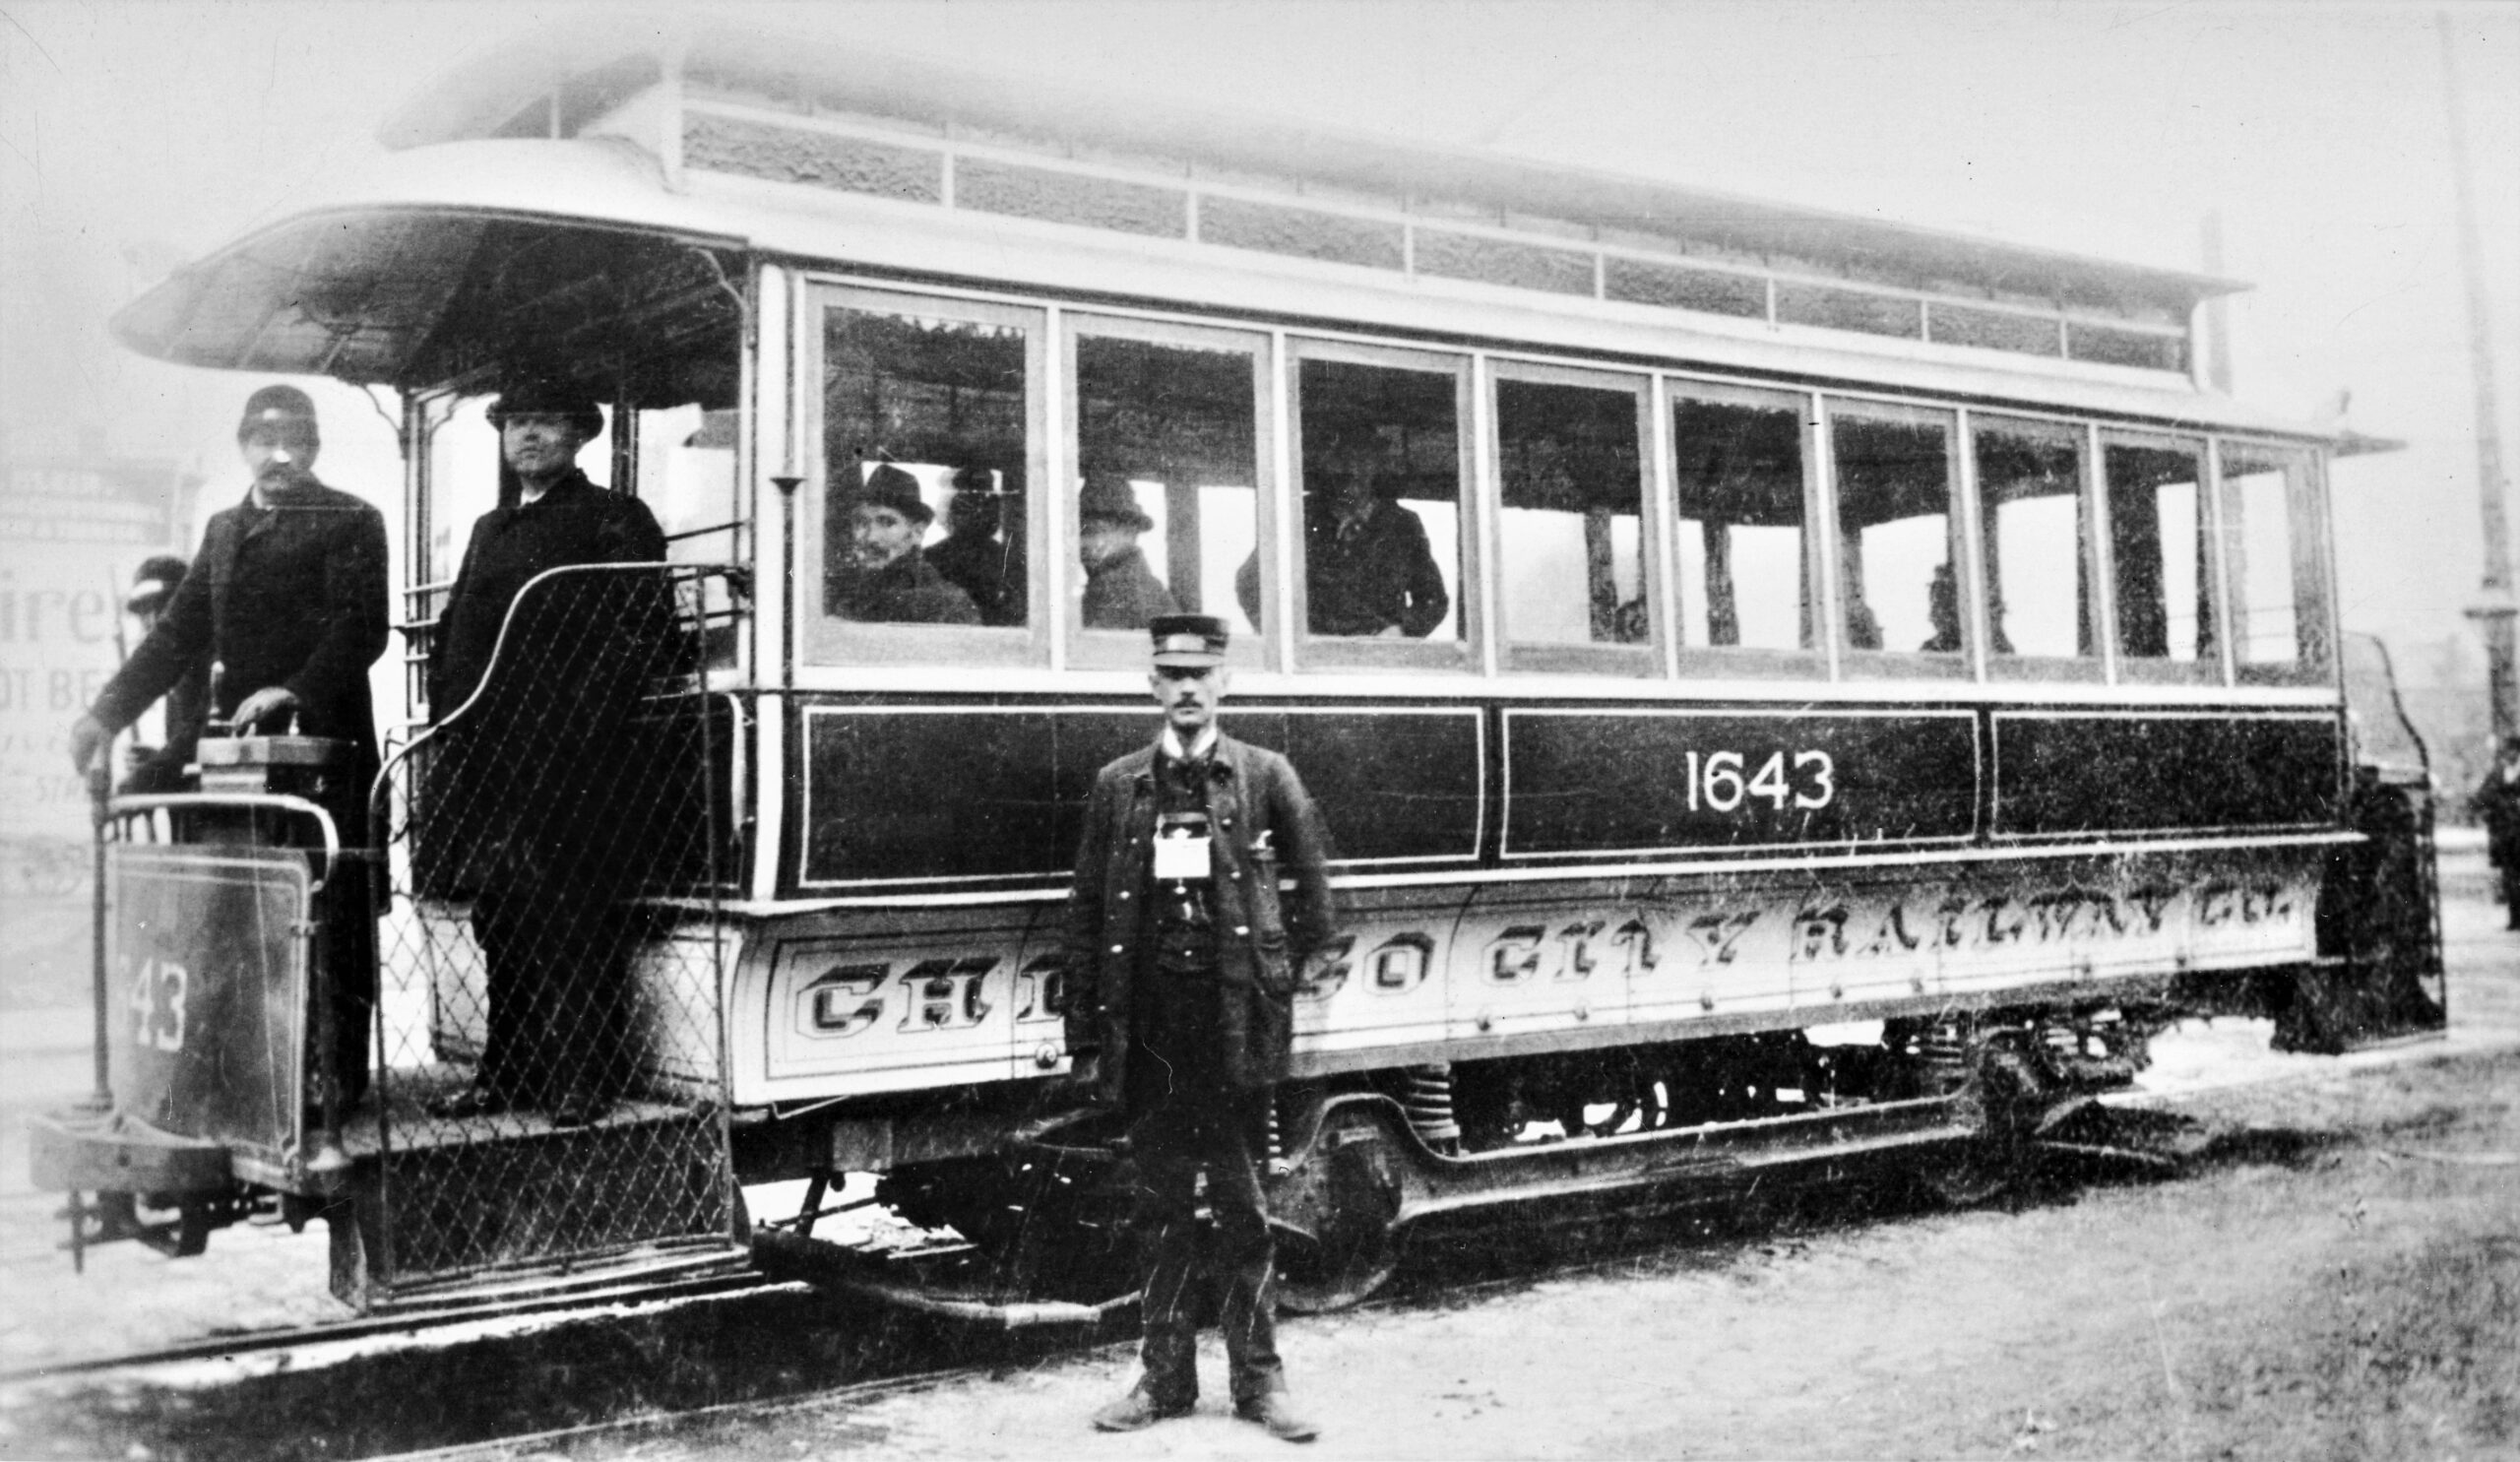 Chicago City Railways | Chicago, Illinois | Car 1643 | with crew |1895 | Ed Frank photo